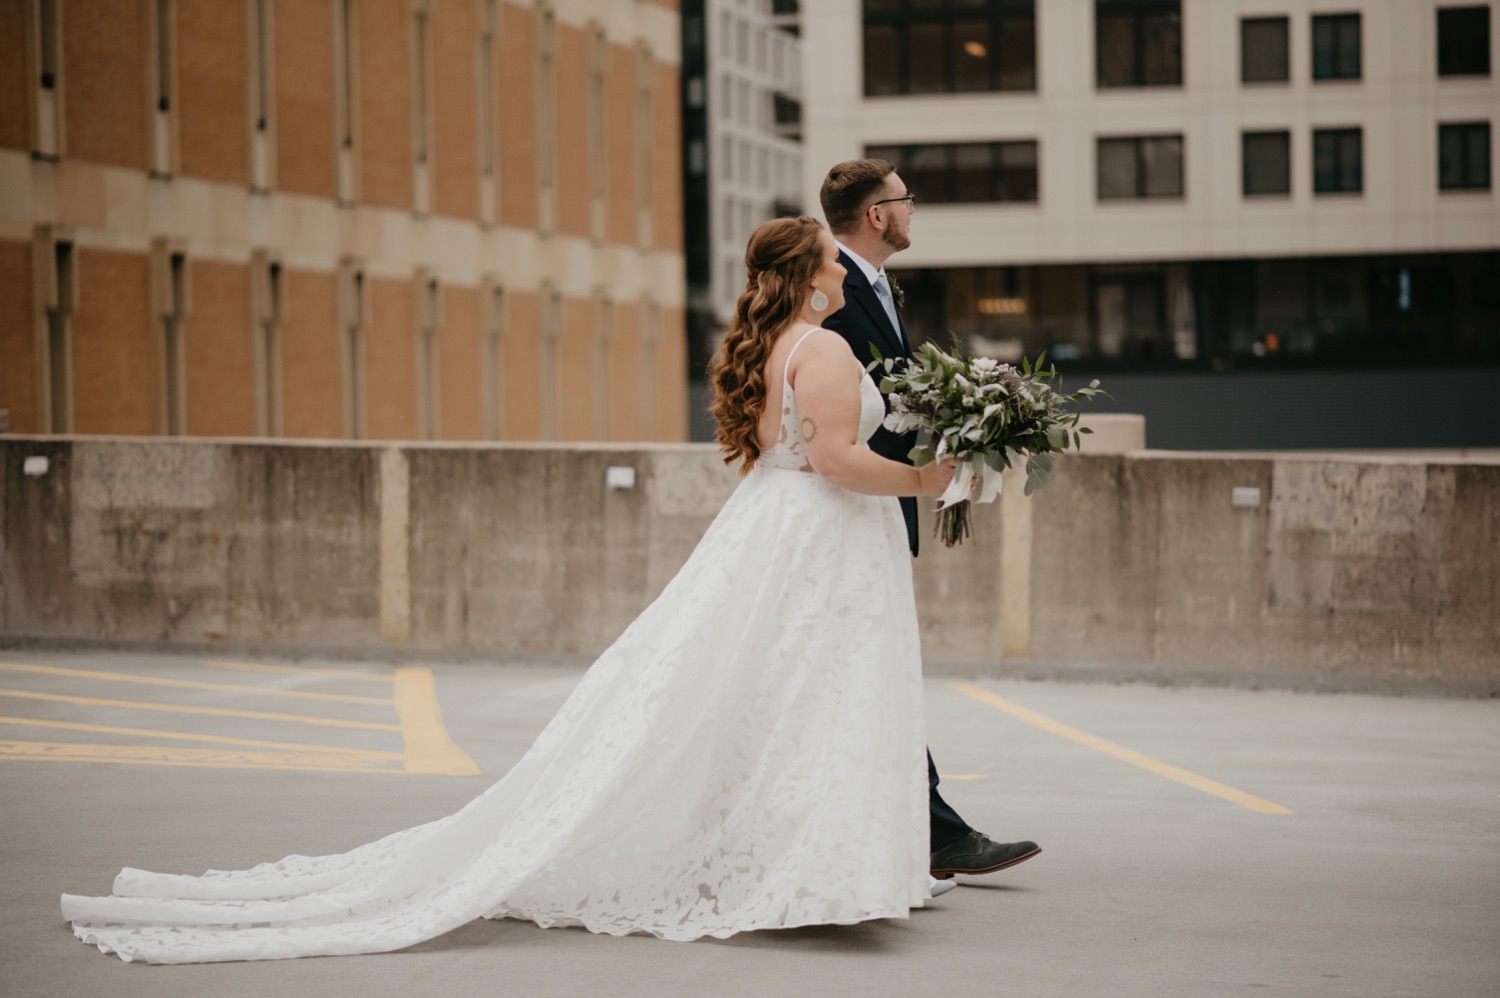 bride and groom walking together parking garage rooftop lumber exchange mpls